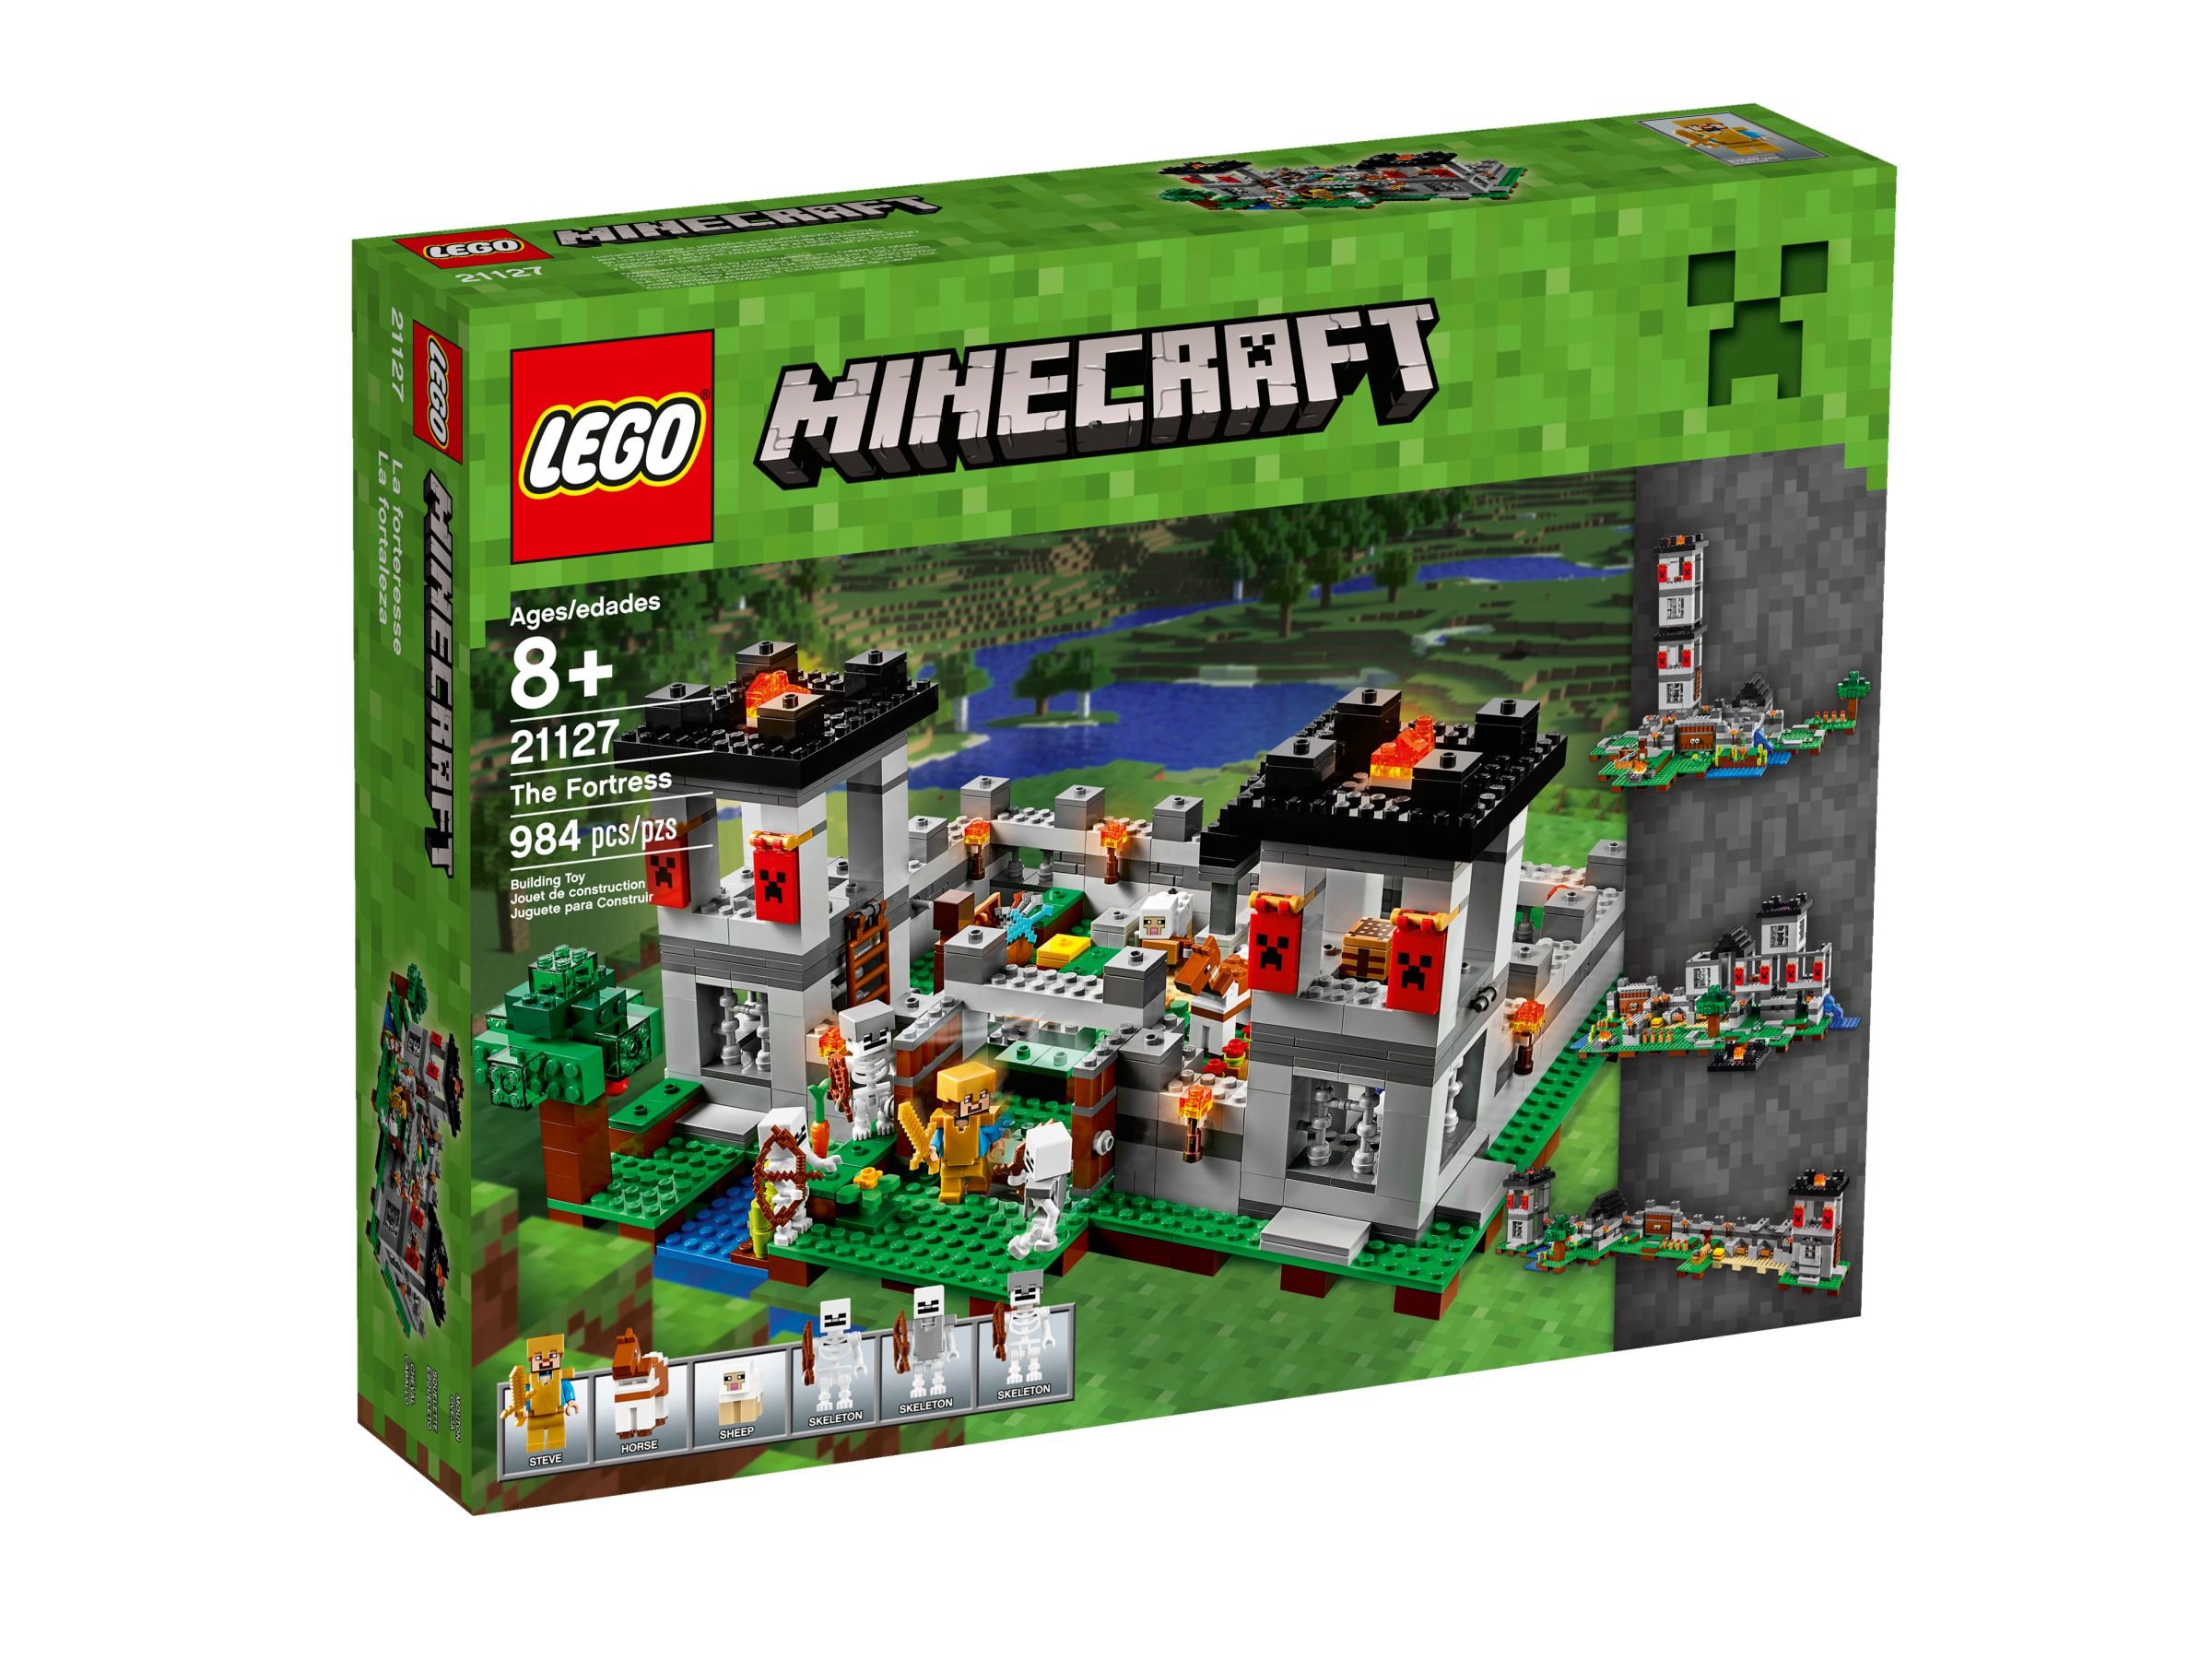 LEGO Minecraft 21127 Die Festung LEGO_21127_alt1.jpg